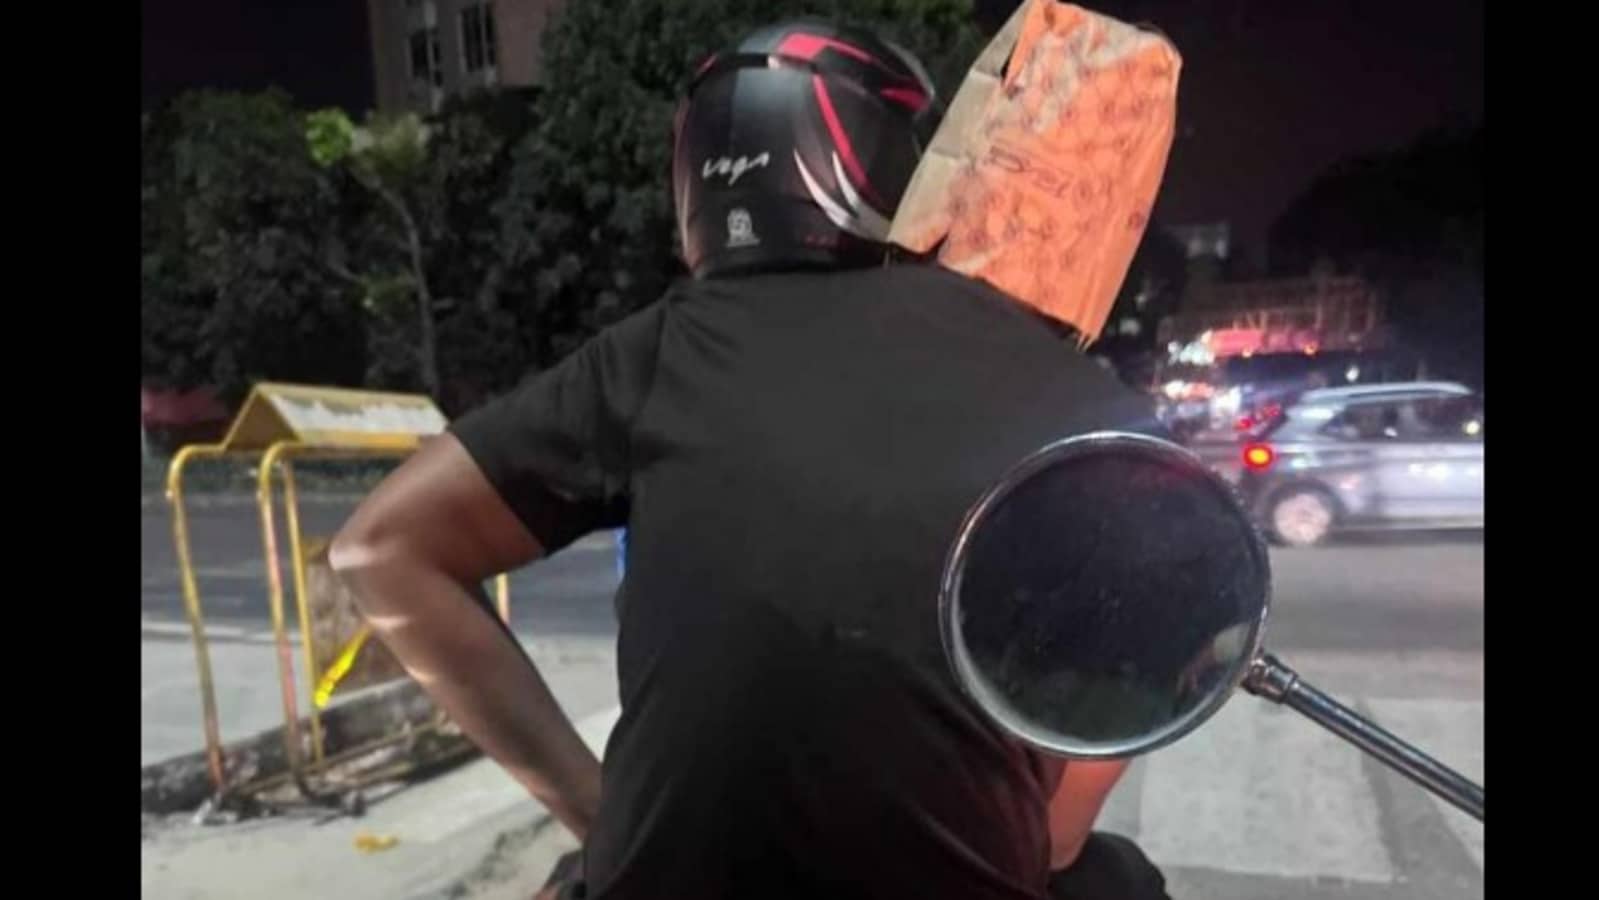 B'luru man wearing paper bag as helmet while riding pillion goes viral. See pic